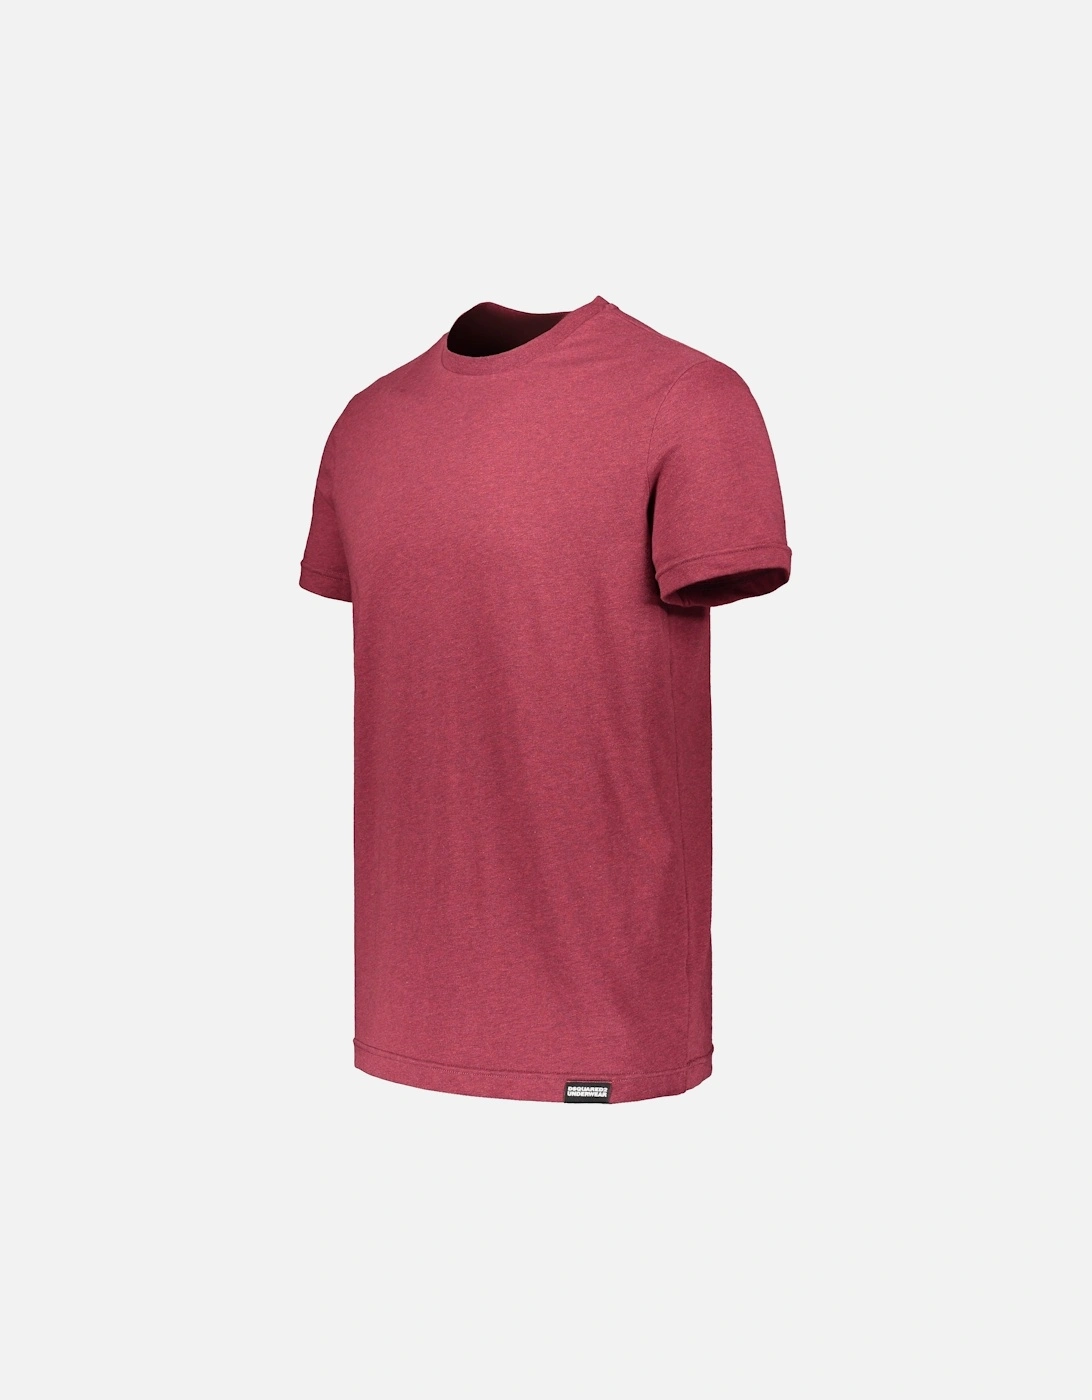 Round Neck T-Shirt - Burgundy